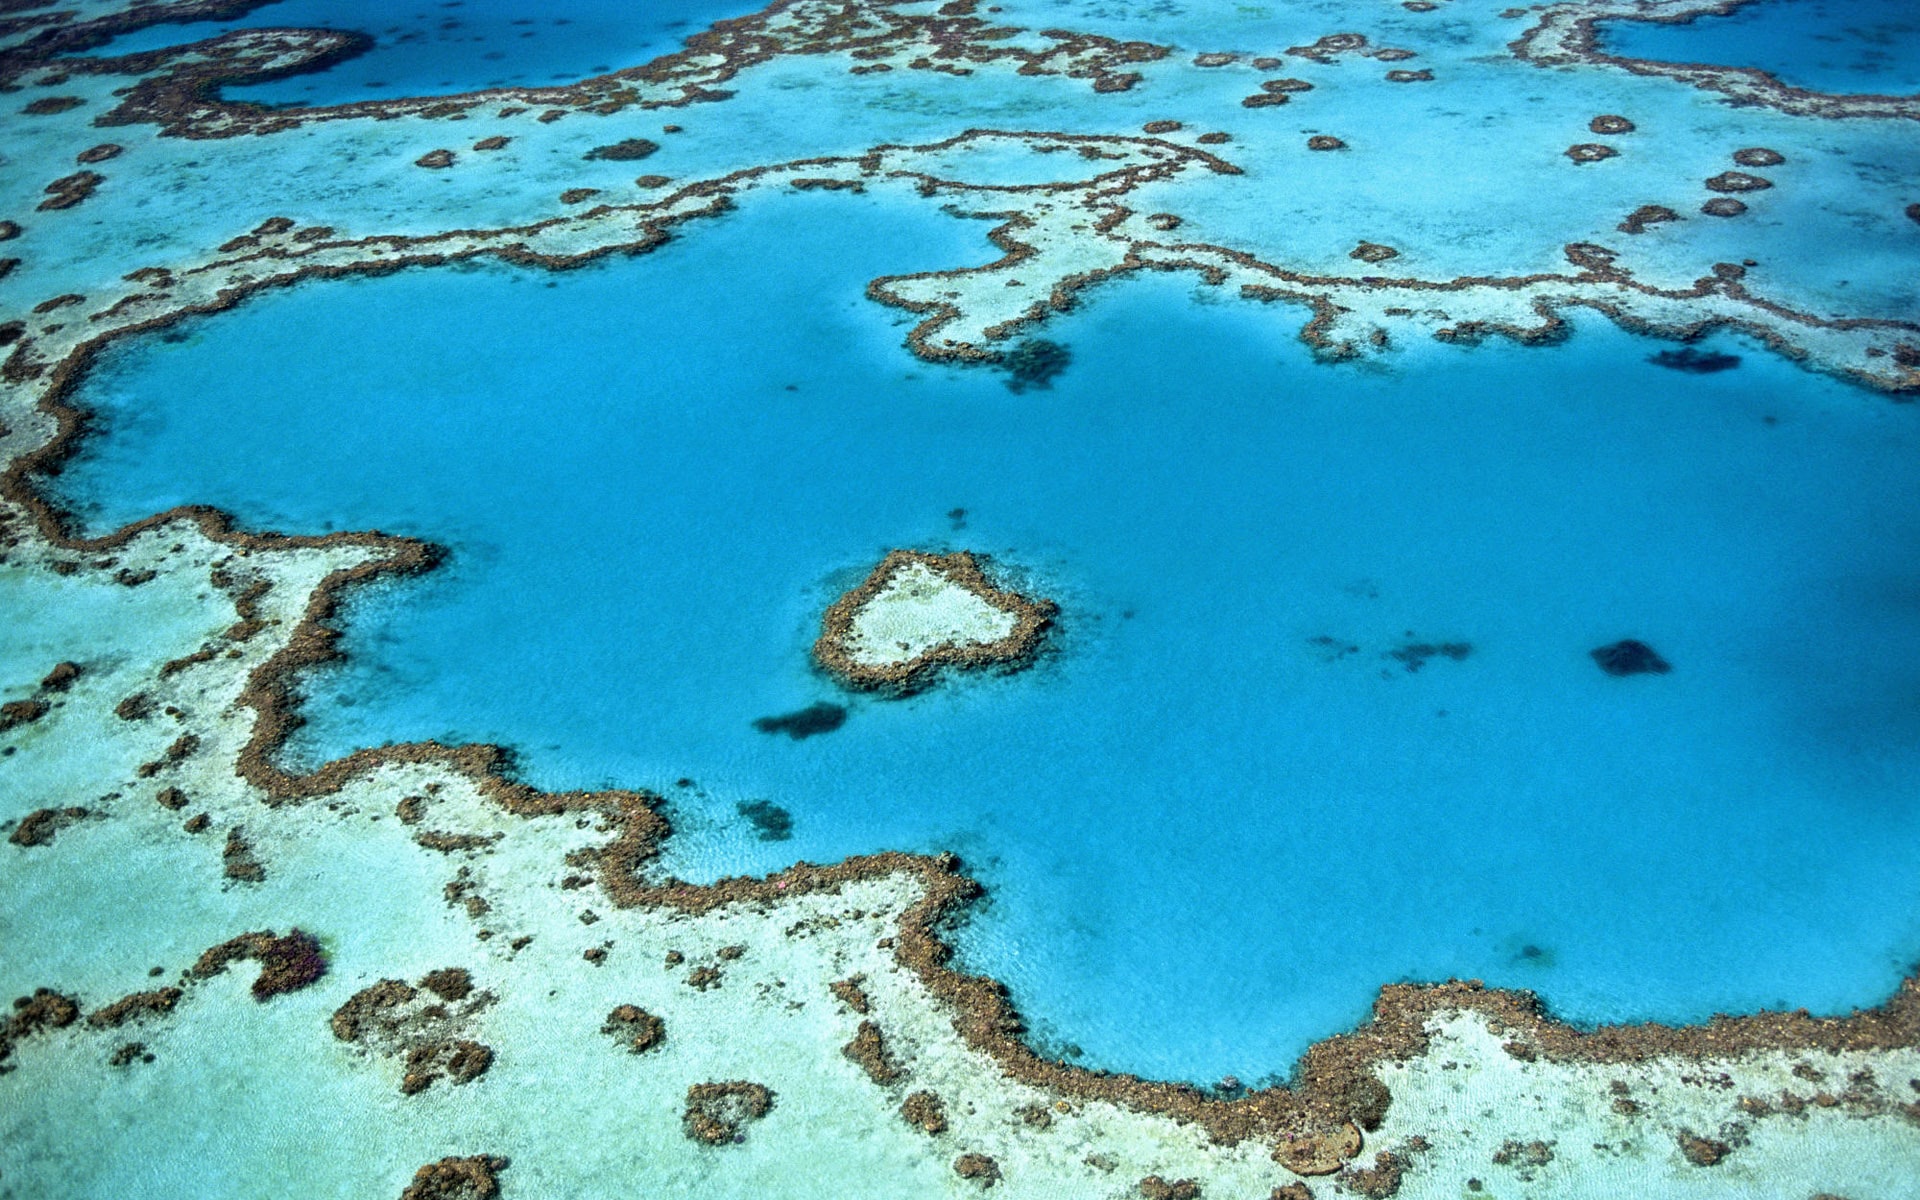 The great barrier reef, australia. 